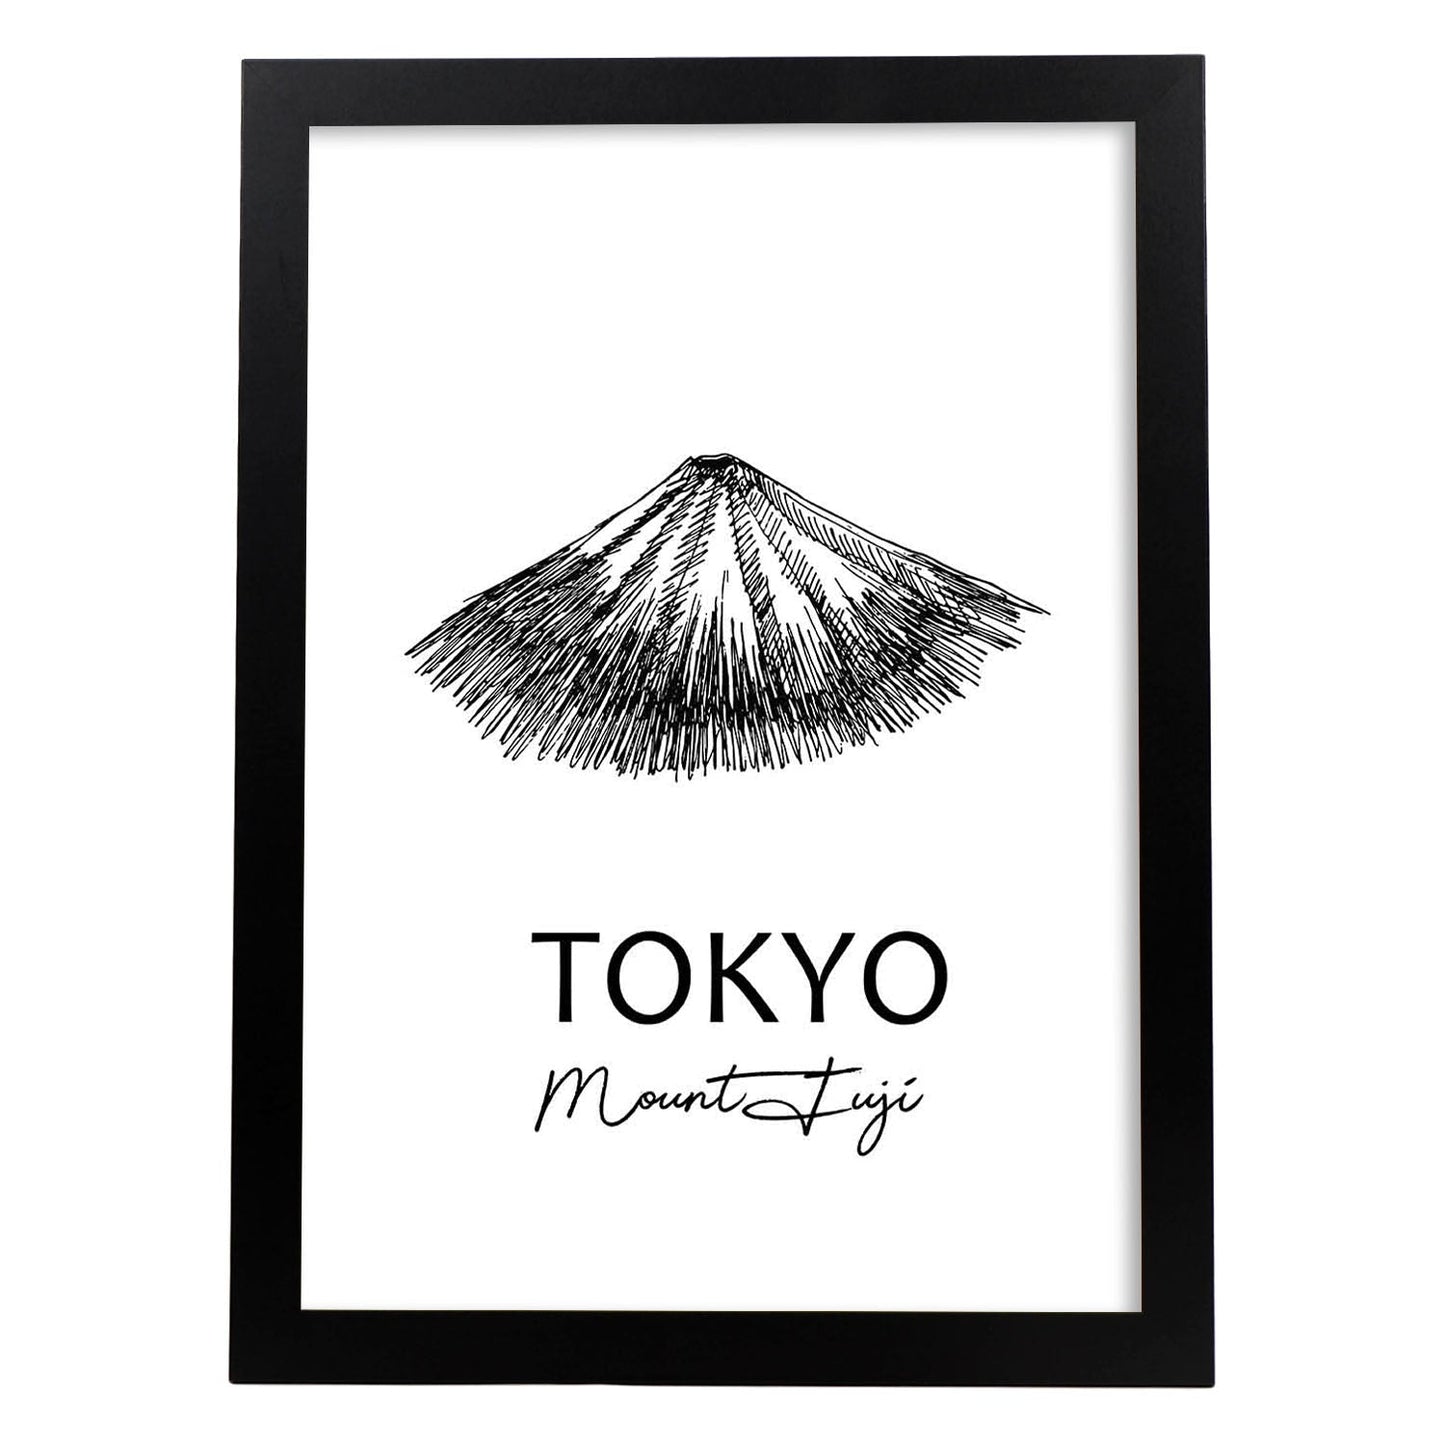 Poster de Tokyo - Monte Fuji. Láminas con monumentos de ciudades.-Artwork-Nacnic-A3-Marco Negro-Nacnic Estudio SL